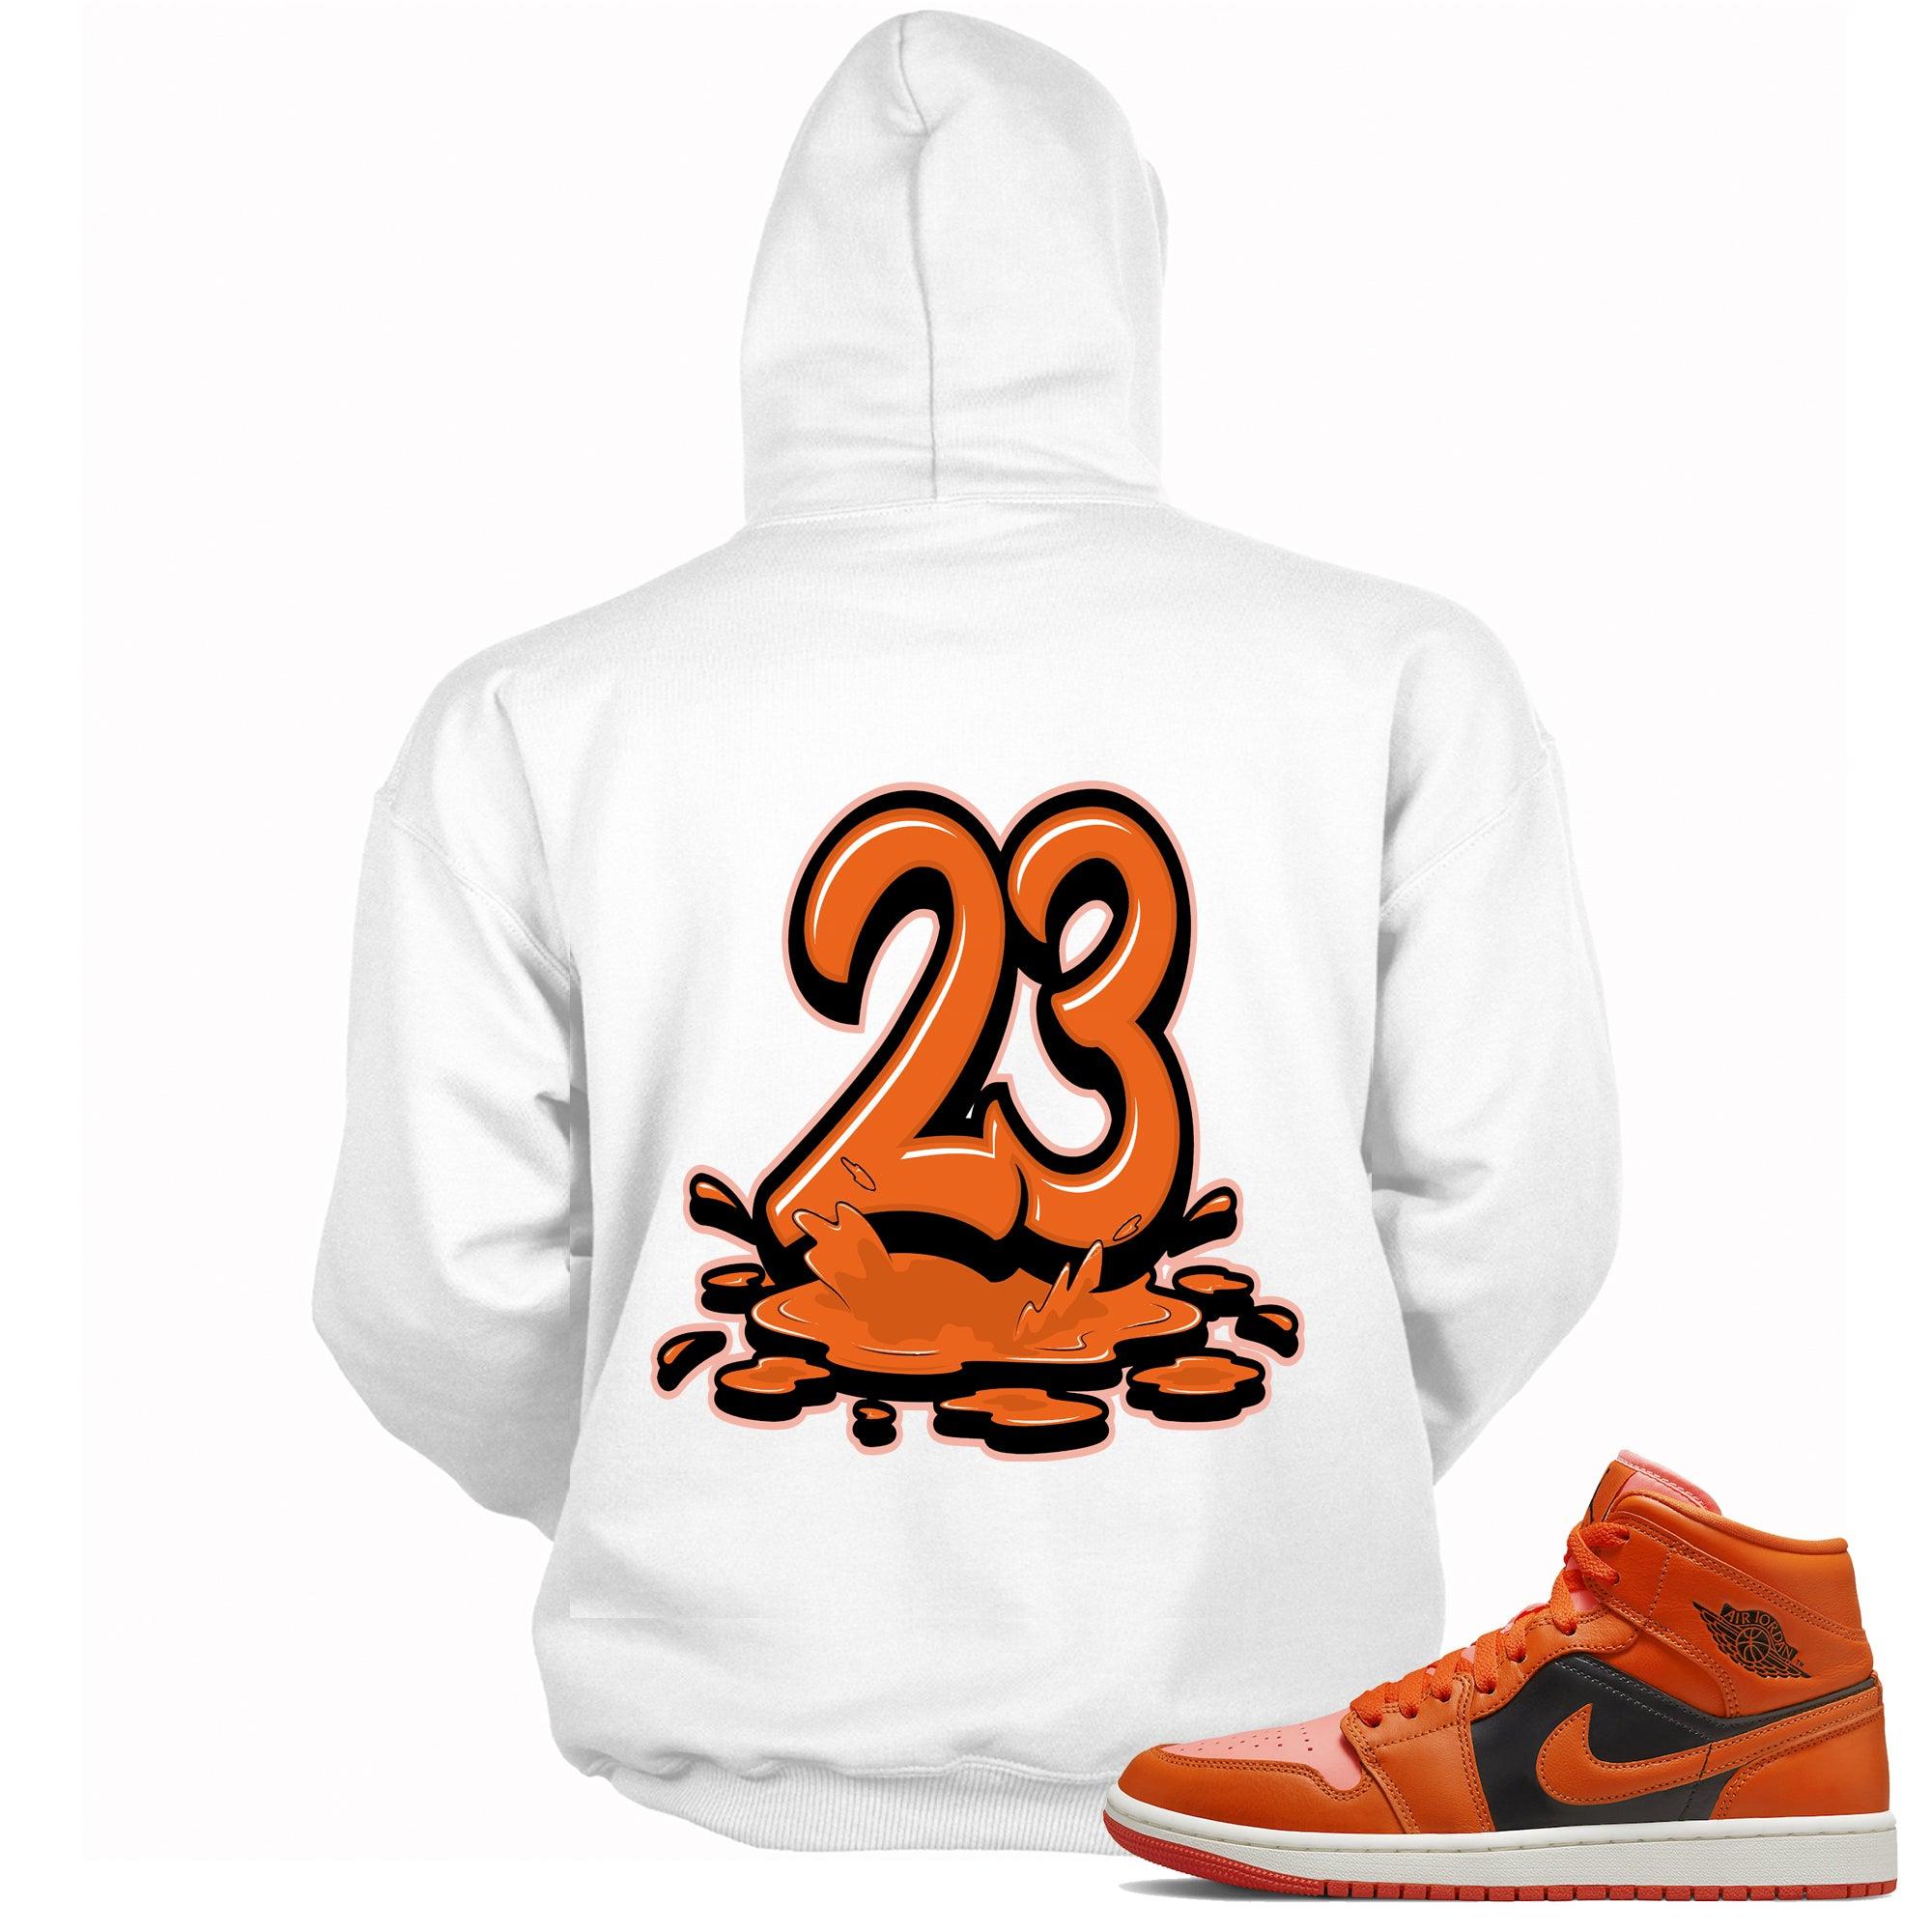 23 Melting Sneaker Sweatshirt AJ 1 Mid Orange Black photo